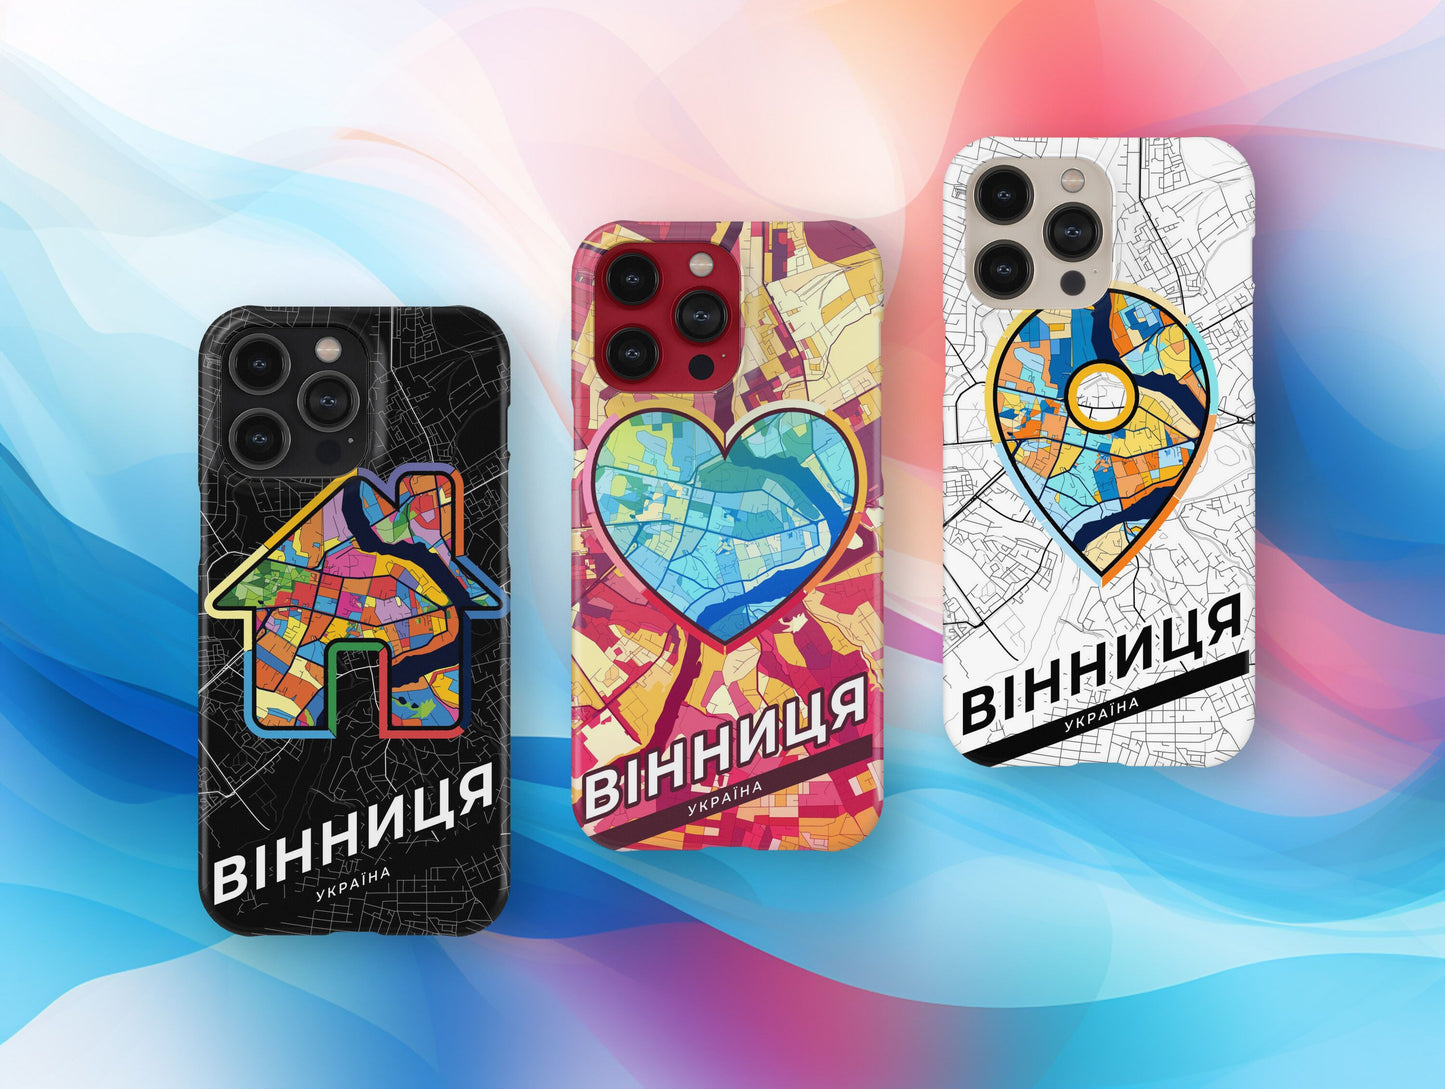 Vinnytsia Ukraine slim phone case with colorful icon